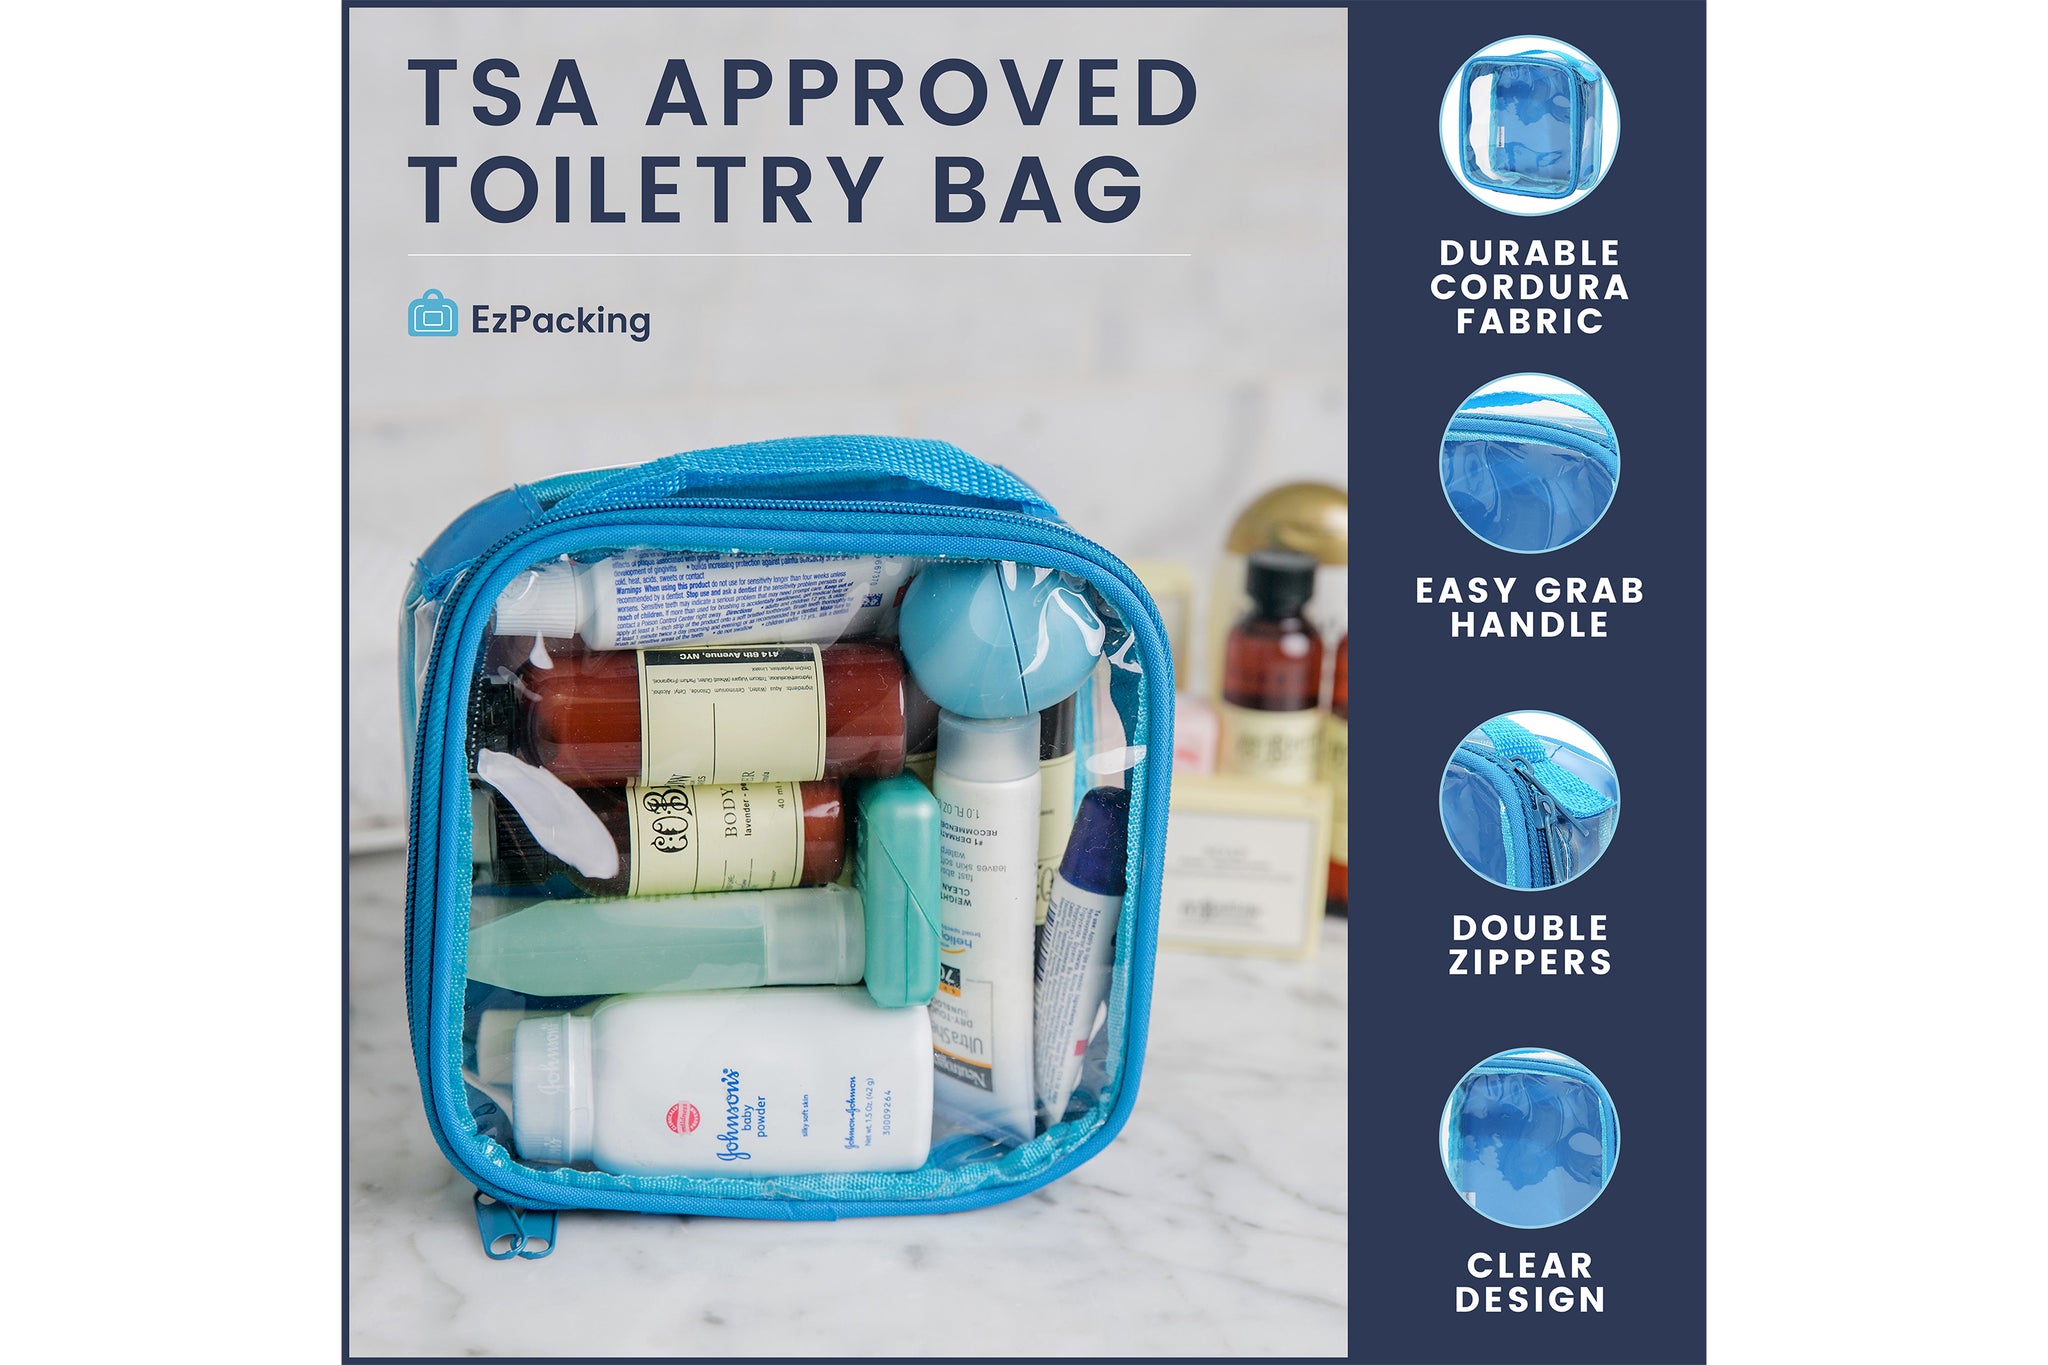 TSA Approved Clear Toiletry Bag - Quart Size 3-1-1 Liquids